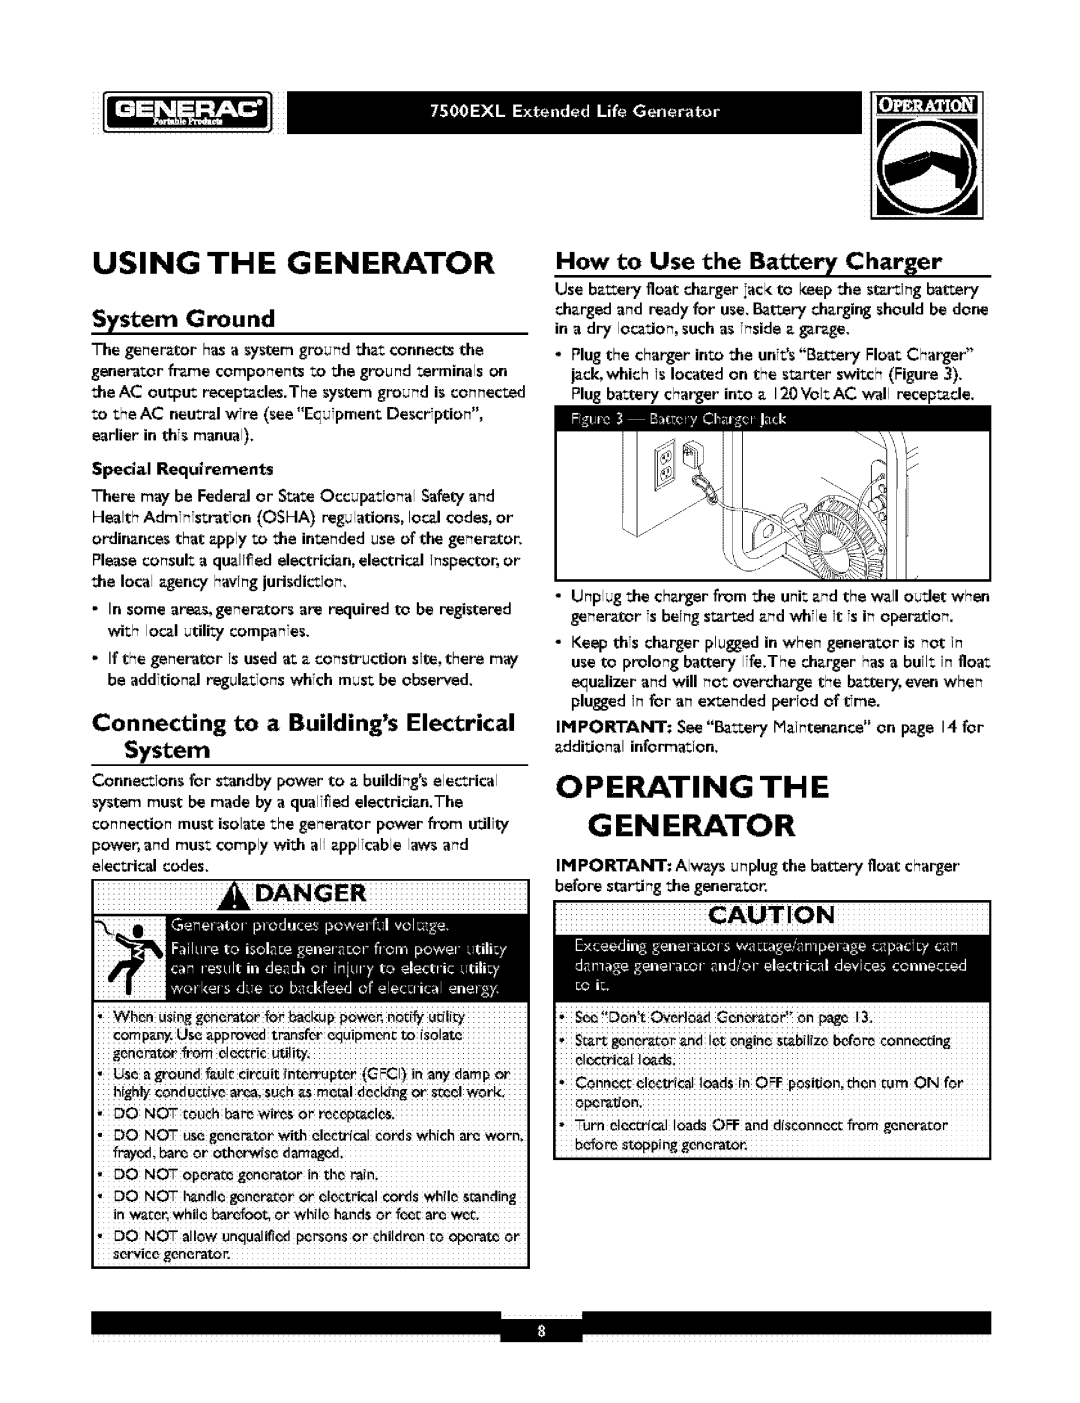 Generac 1019-3 Using The Generator, Operating The, G En Erato R, System Ground, wh , usi,g o,o tor orbackupp0*o, Danger 